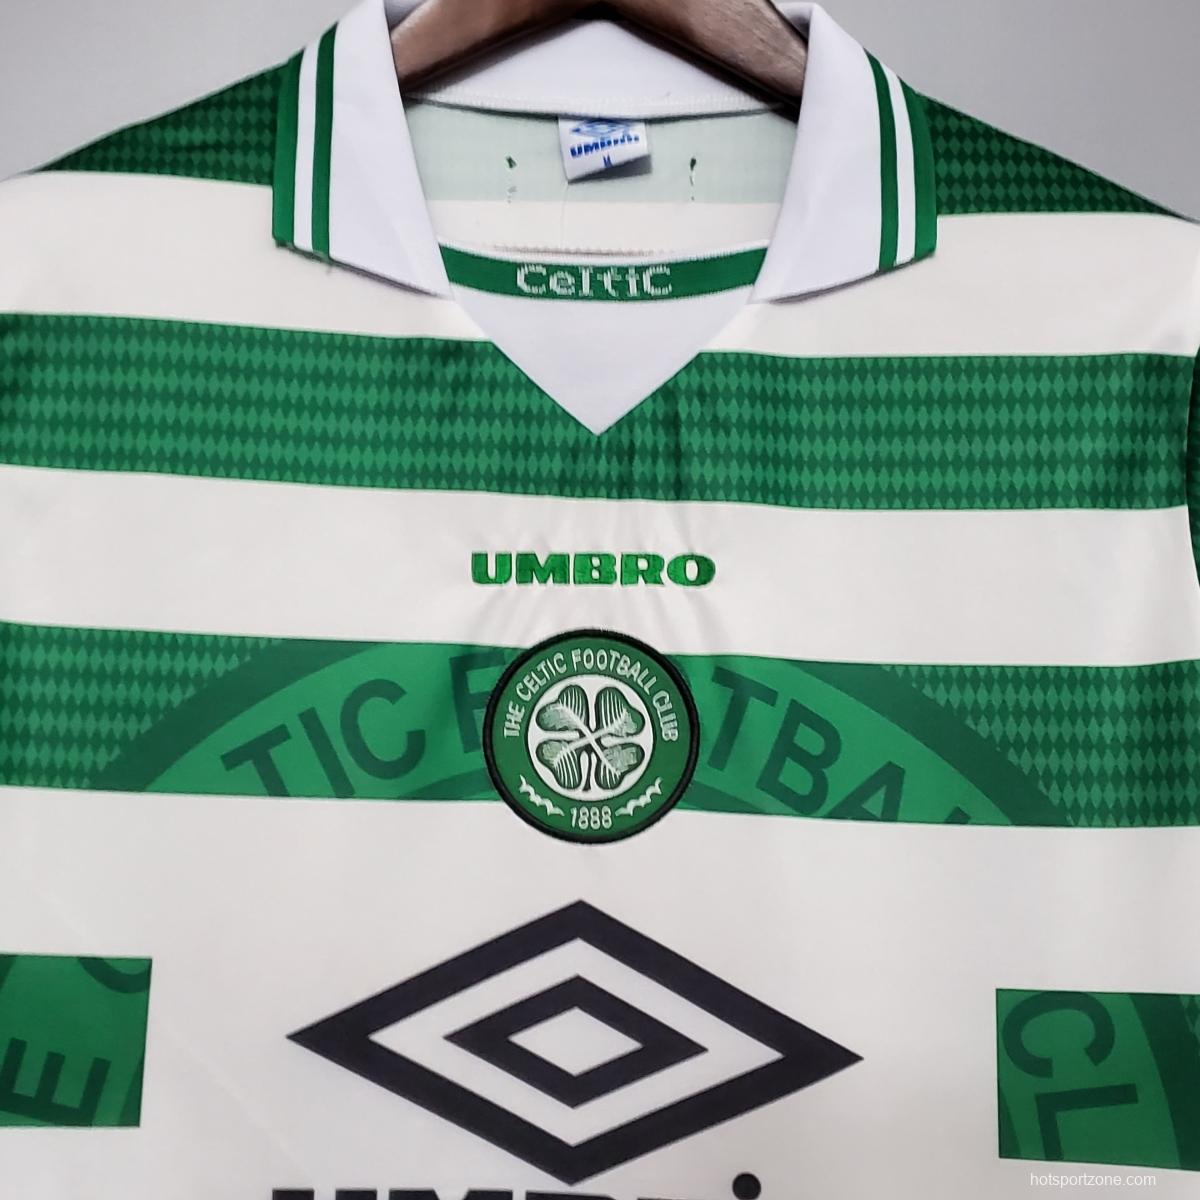 Retro 98/99 Celtic home Soccer Jersey